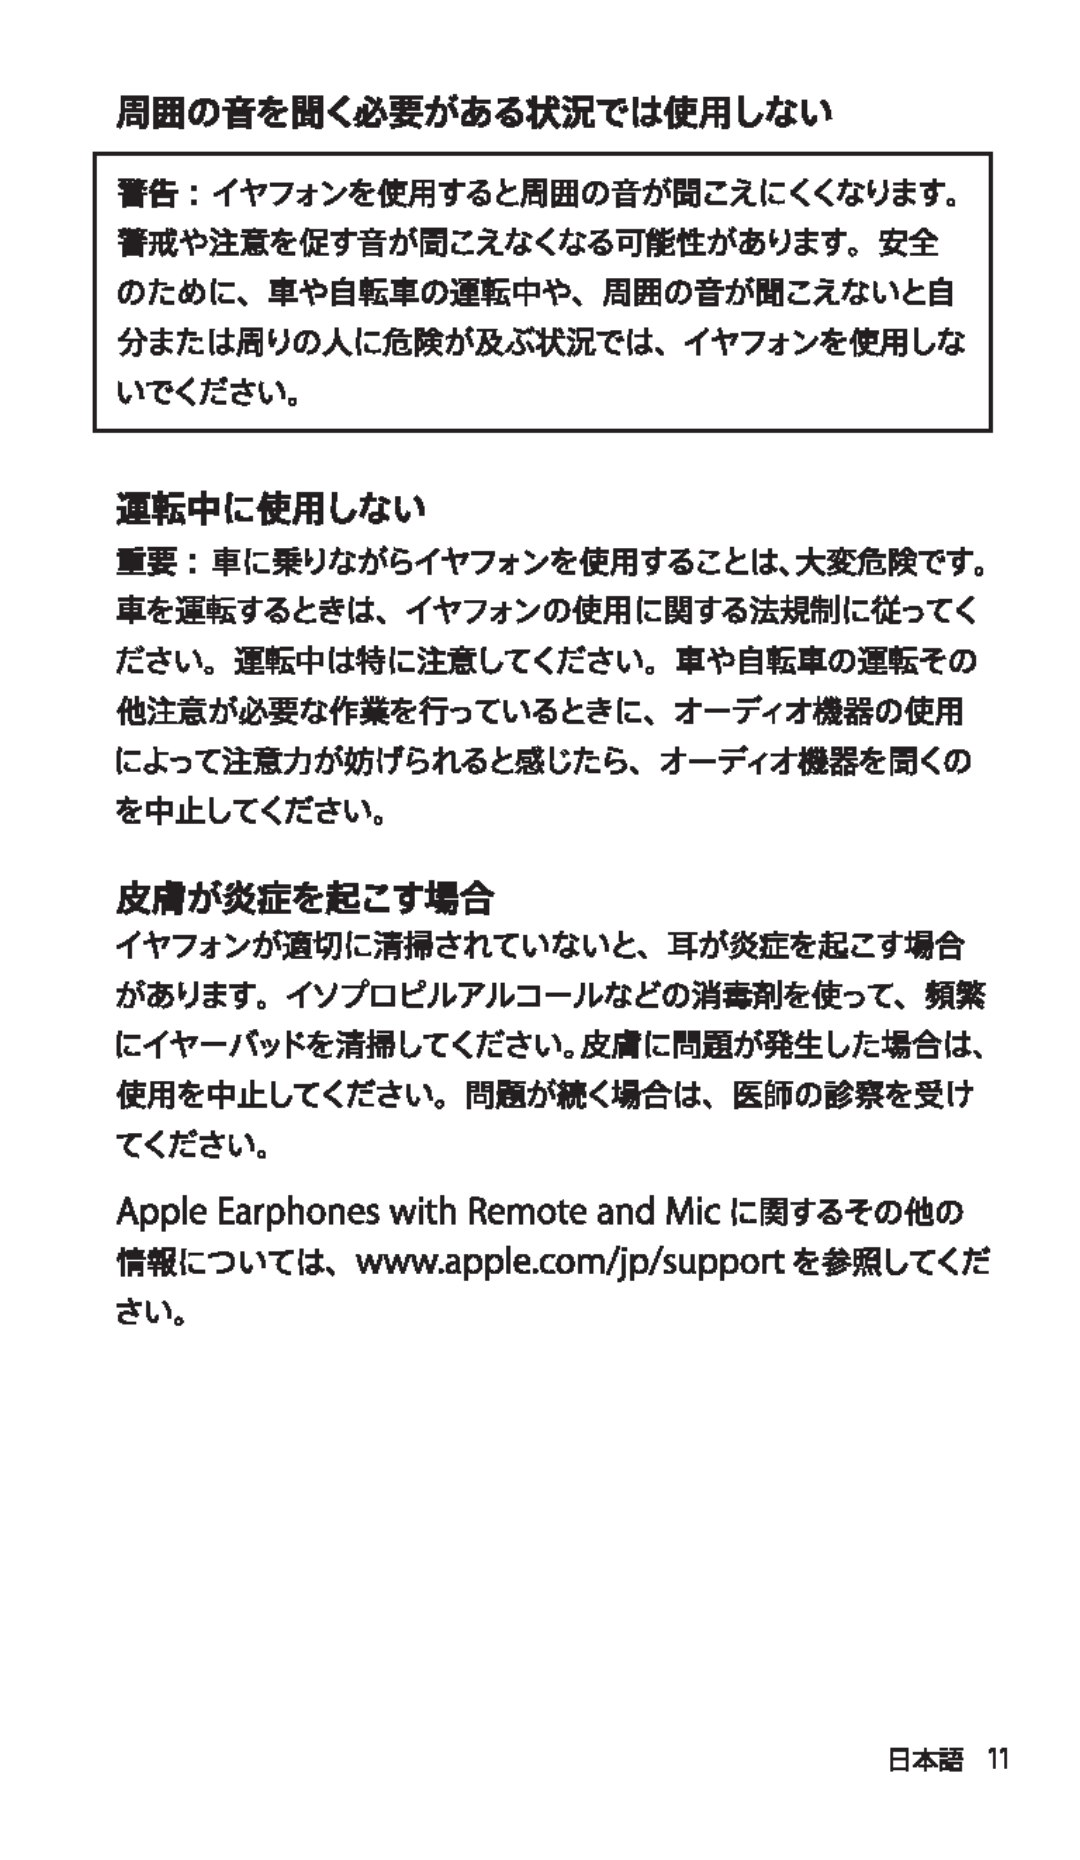 Apple ZM034-5431-A manual 